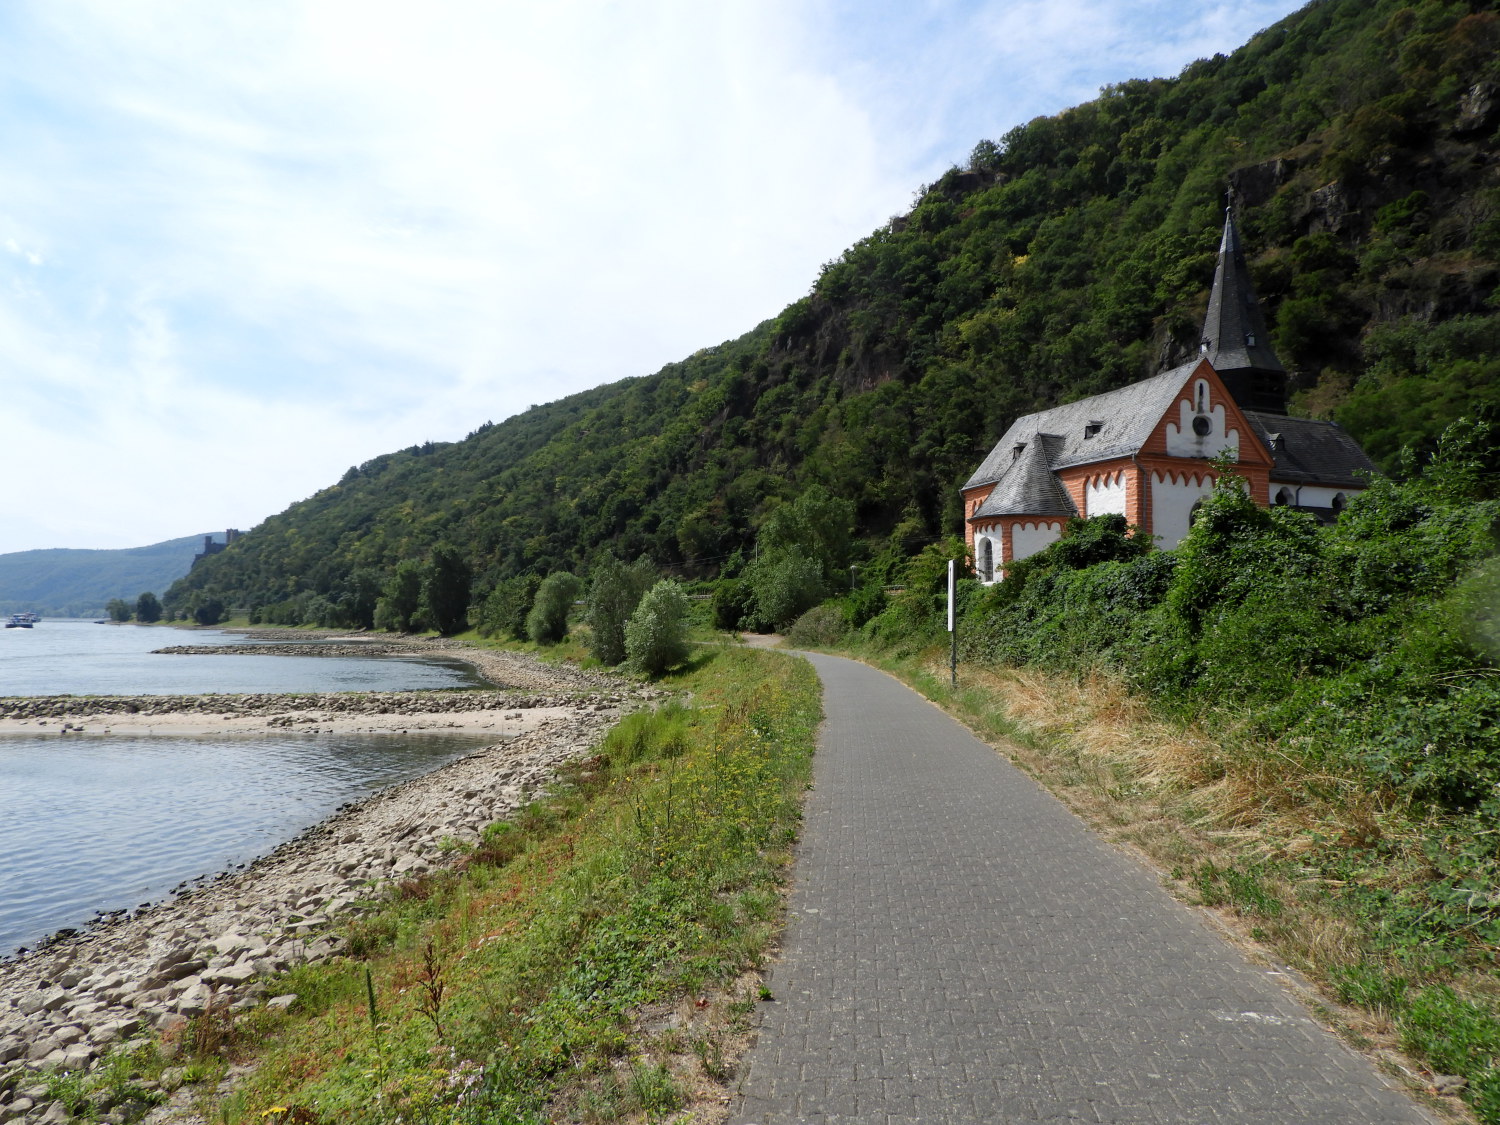 The Rhine side way to Bingen